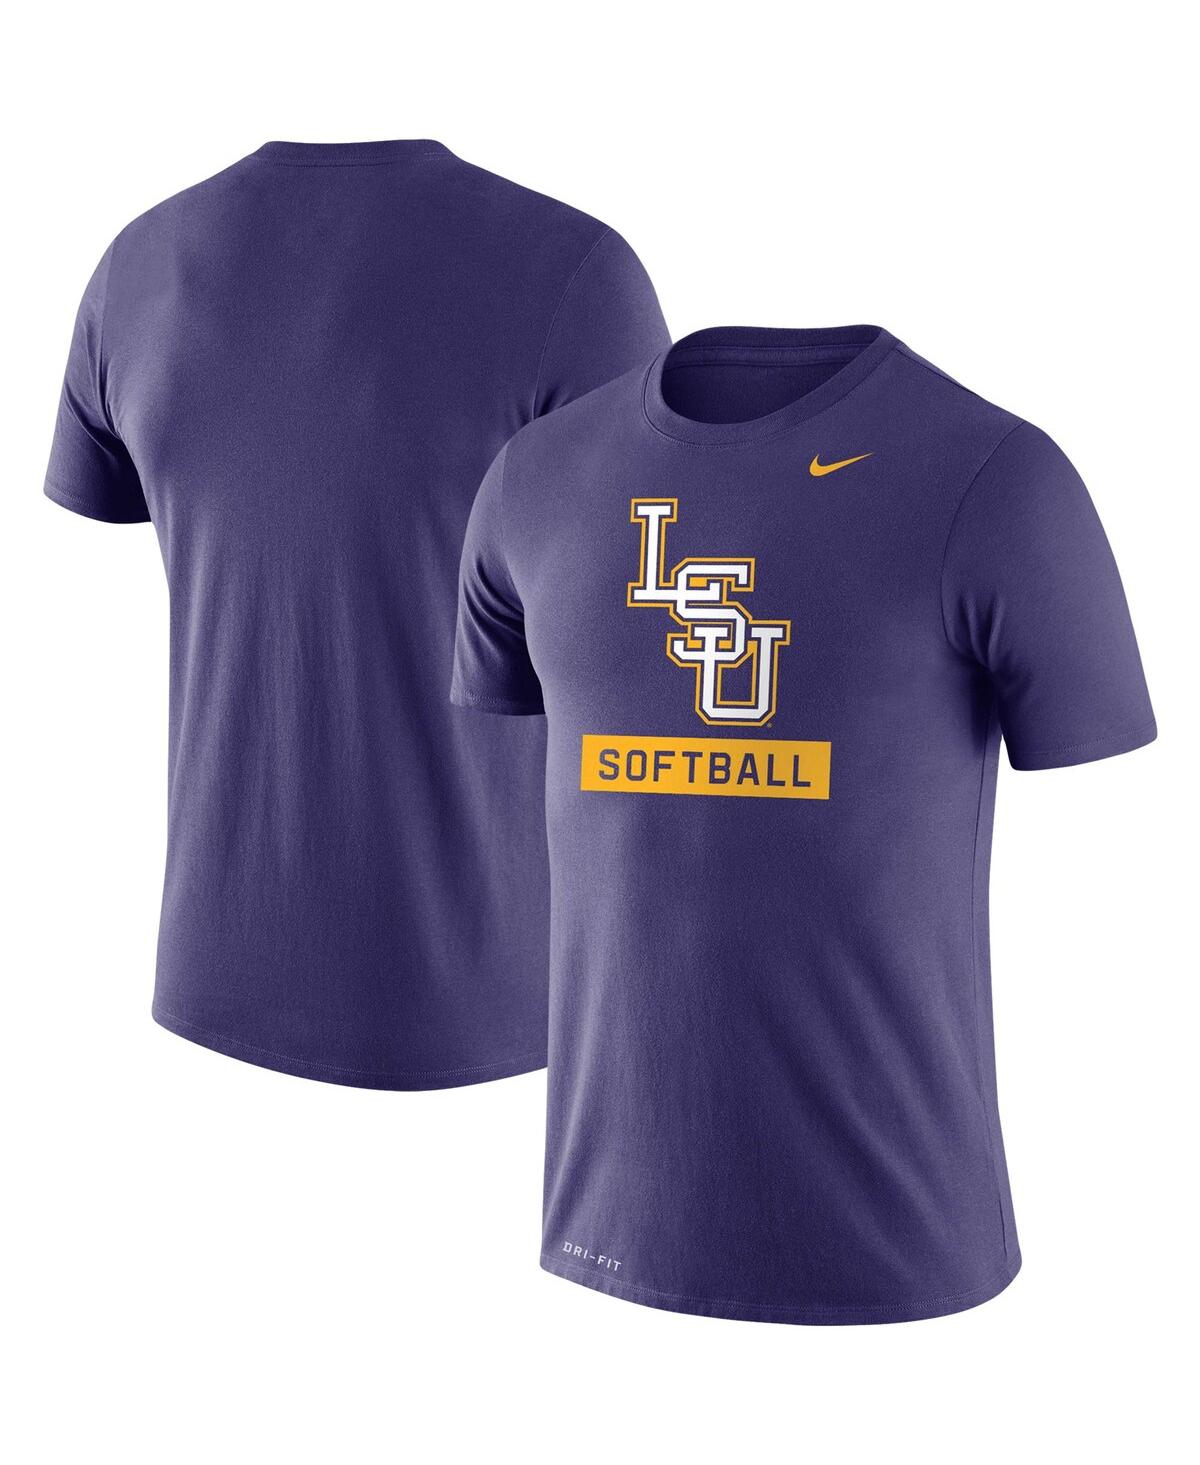 Shop Nike Men's  Purple Lsu Tigers Softball Drop Legend Performance T-shirt